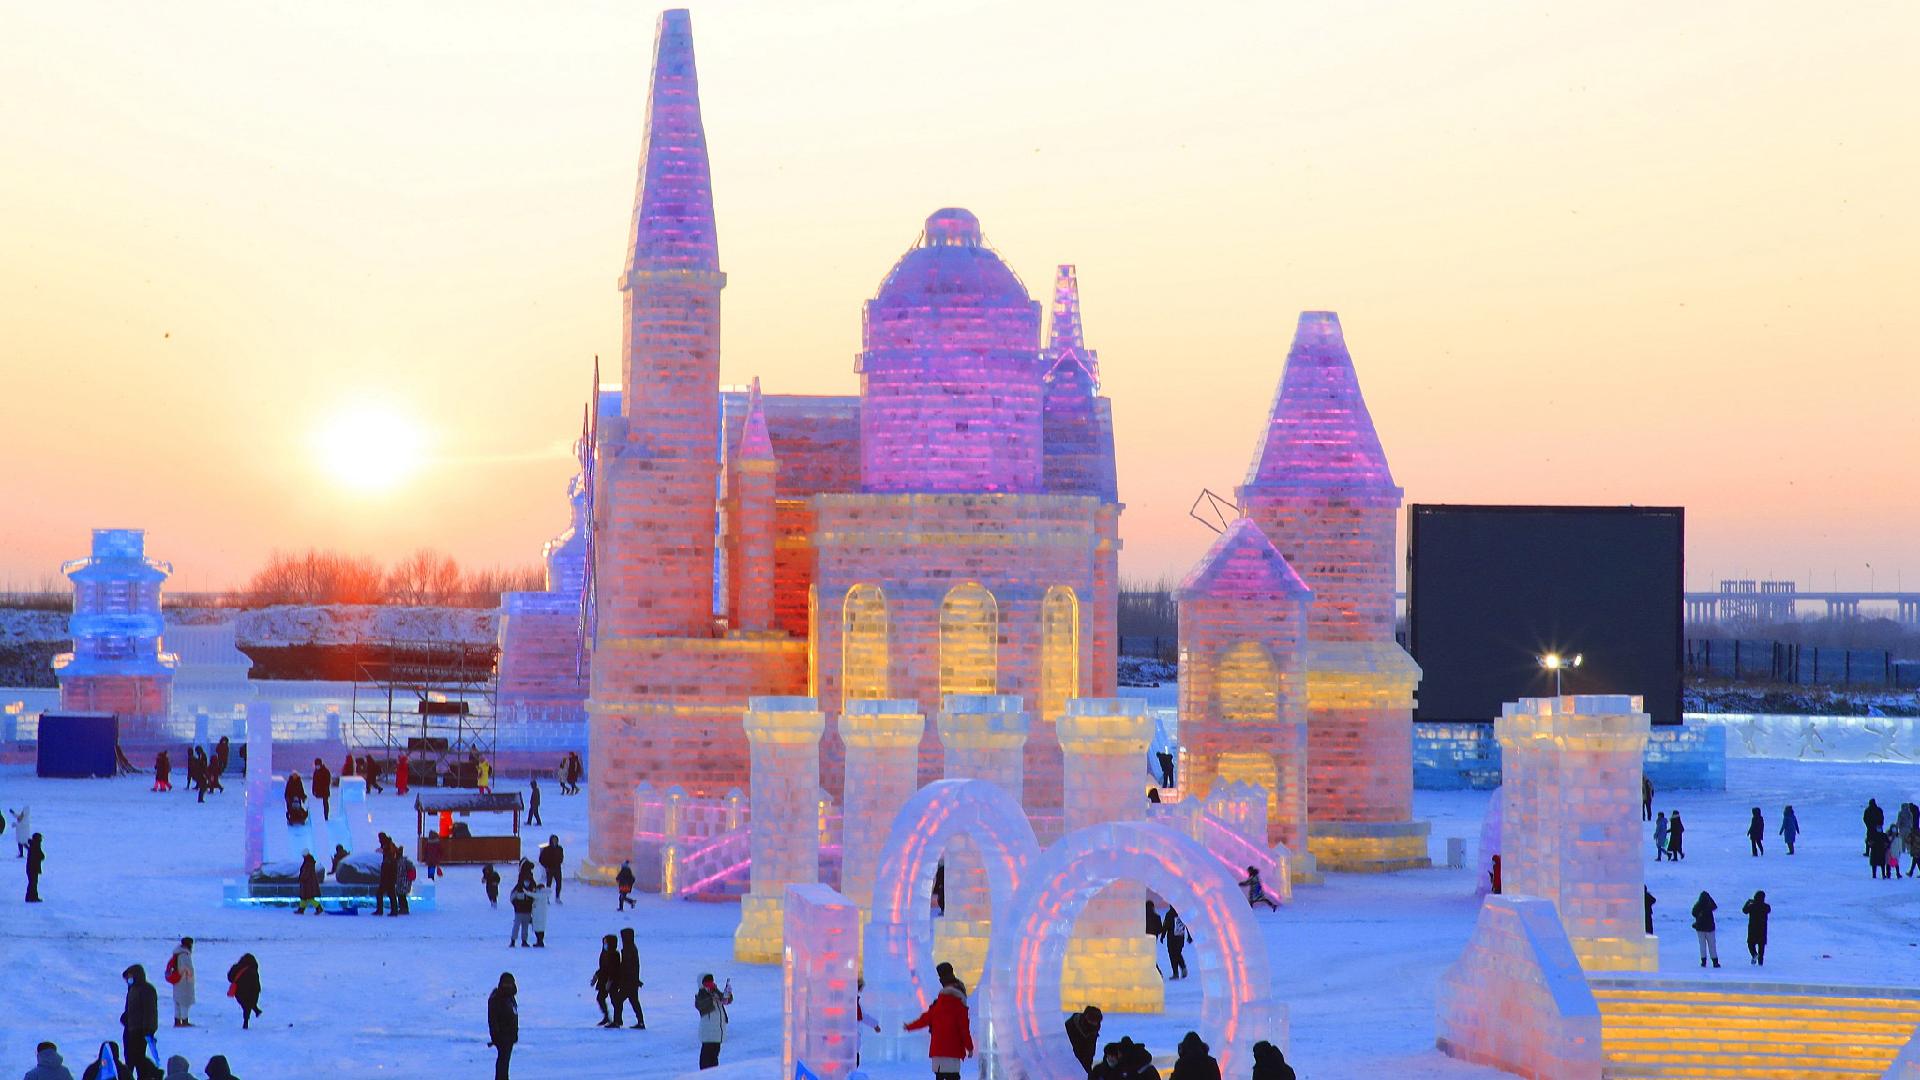 White wonderland Harbin IceSnow World wows visitors with sculptures